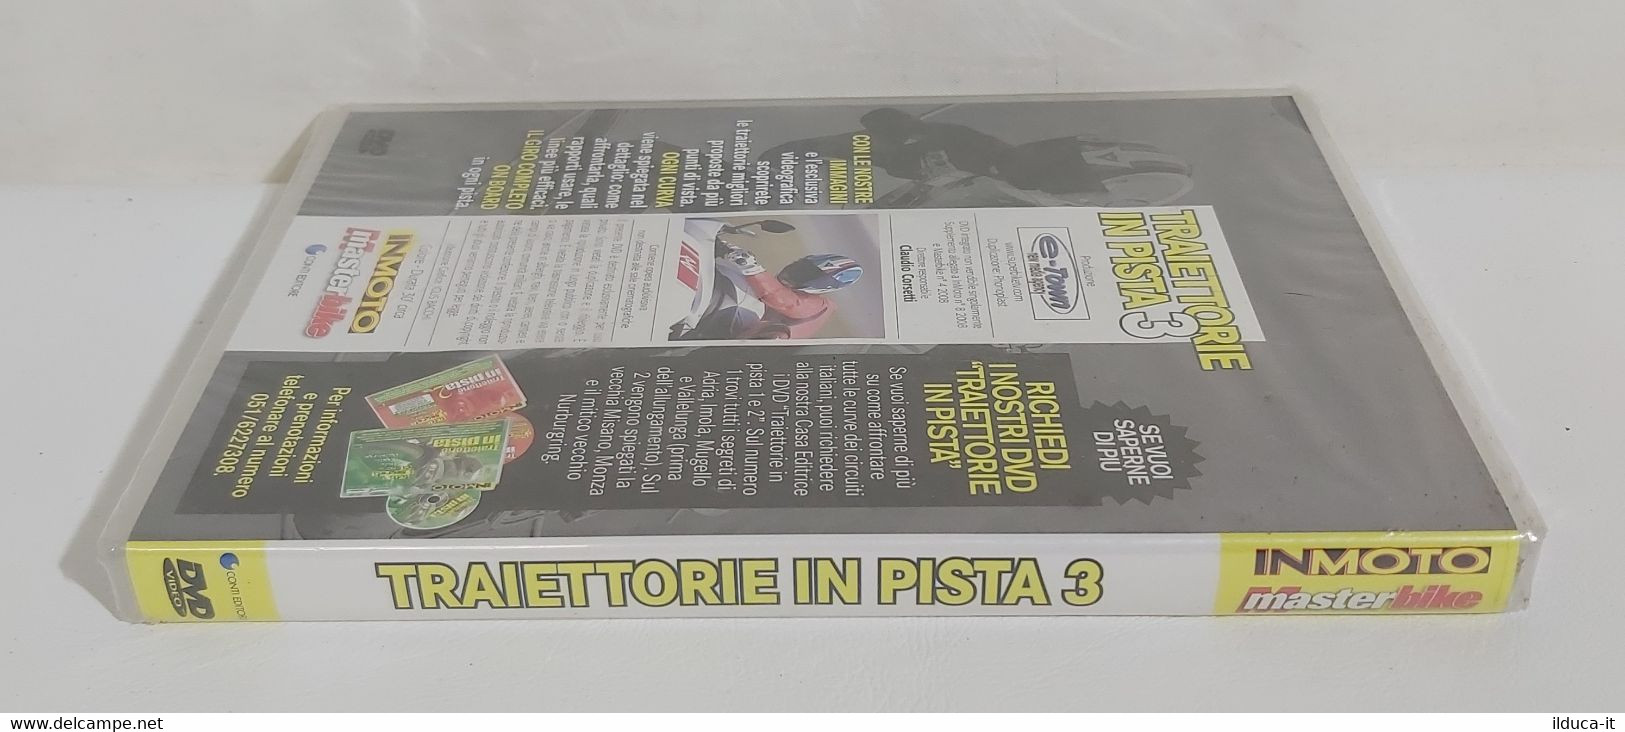 I104056 DVD - Traiettorie In Pista 3 - In Moto / Masterbike - Sigillato - Deporte